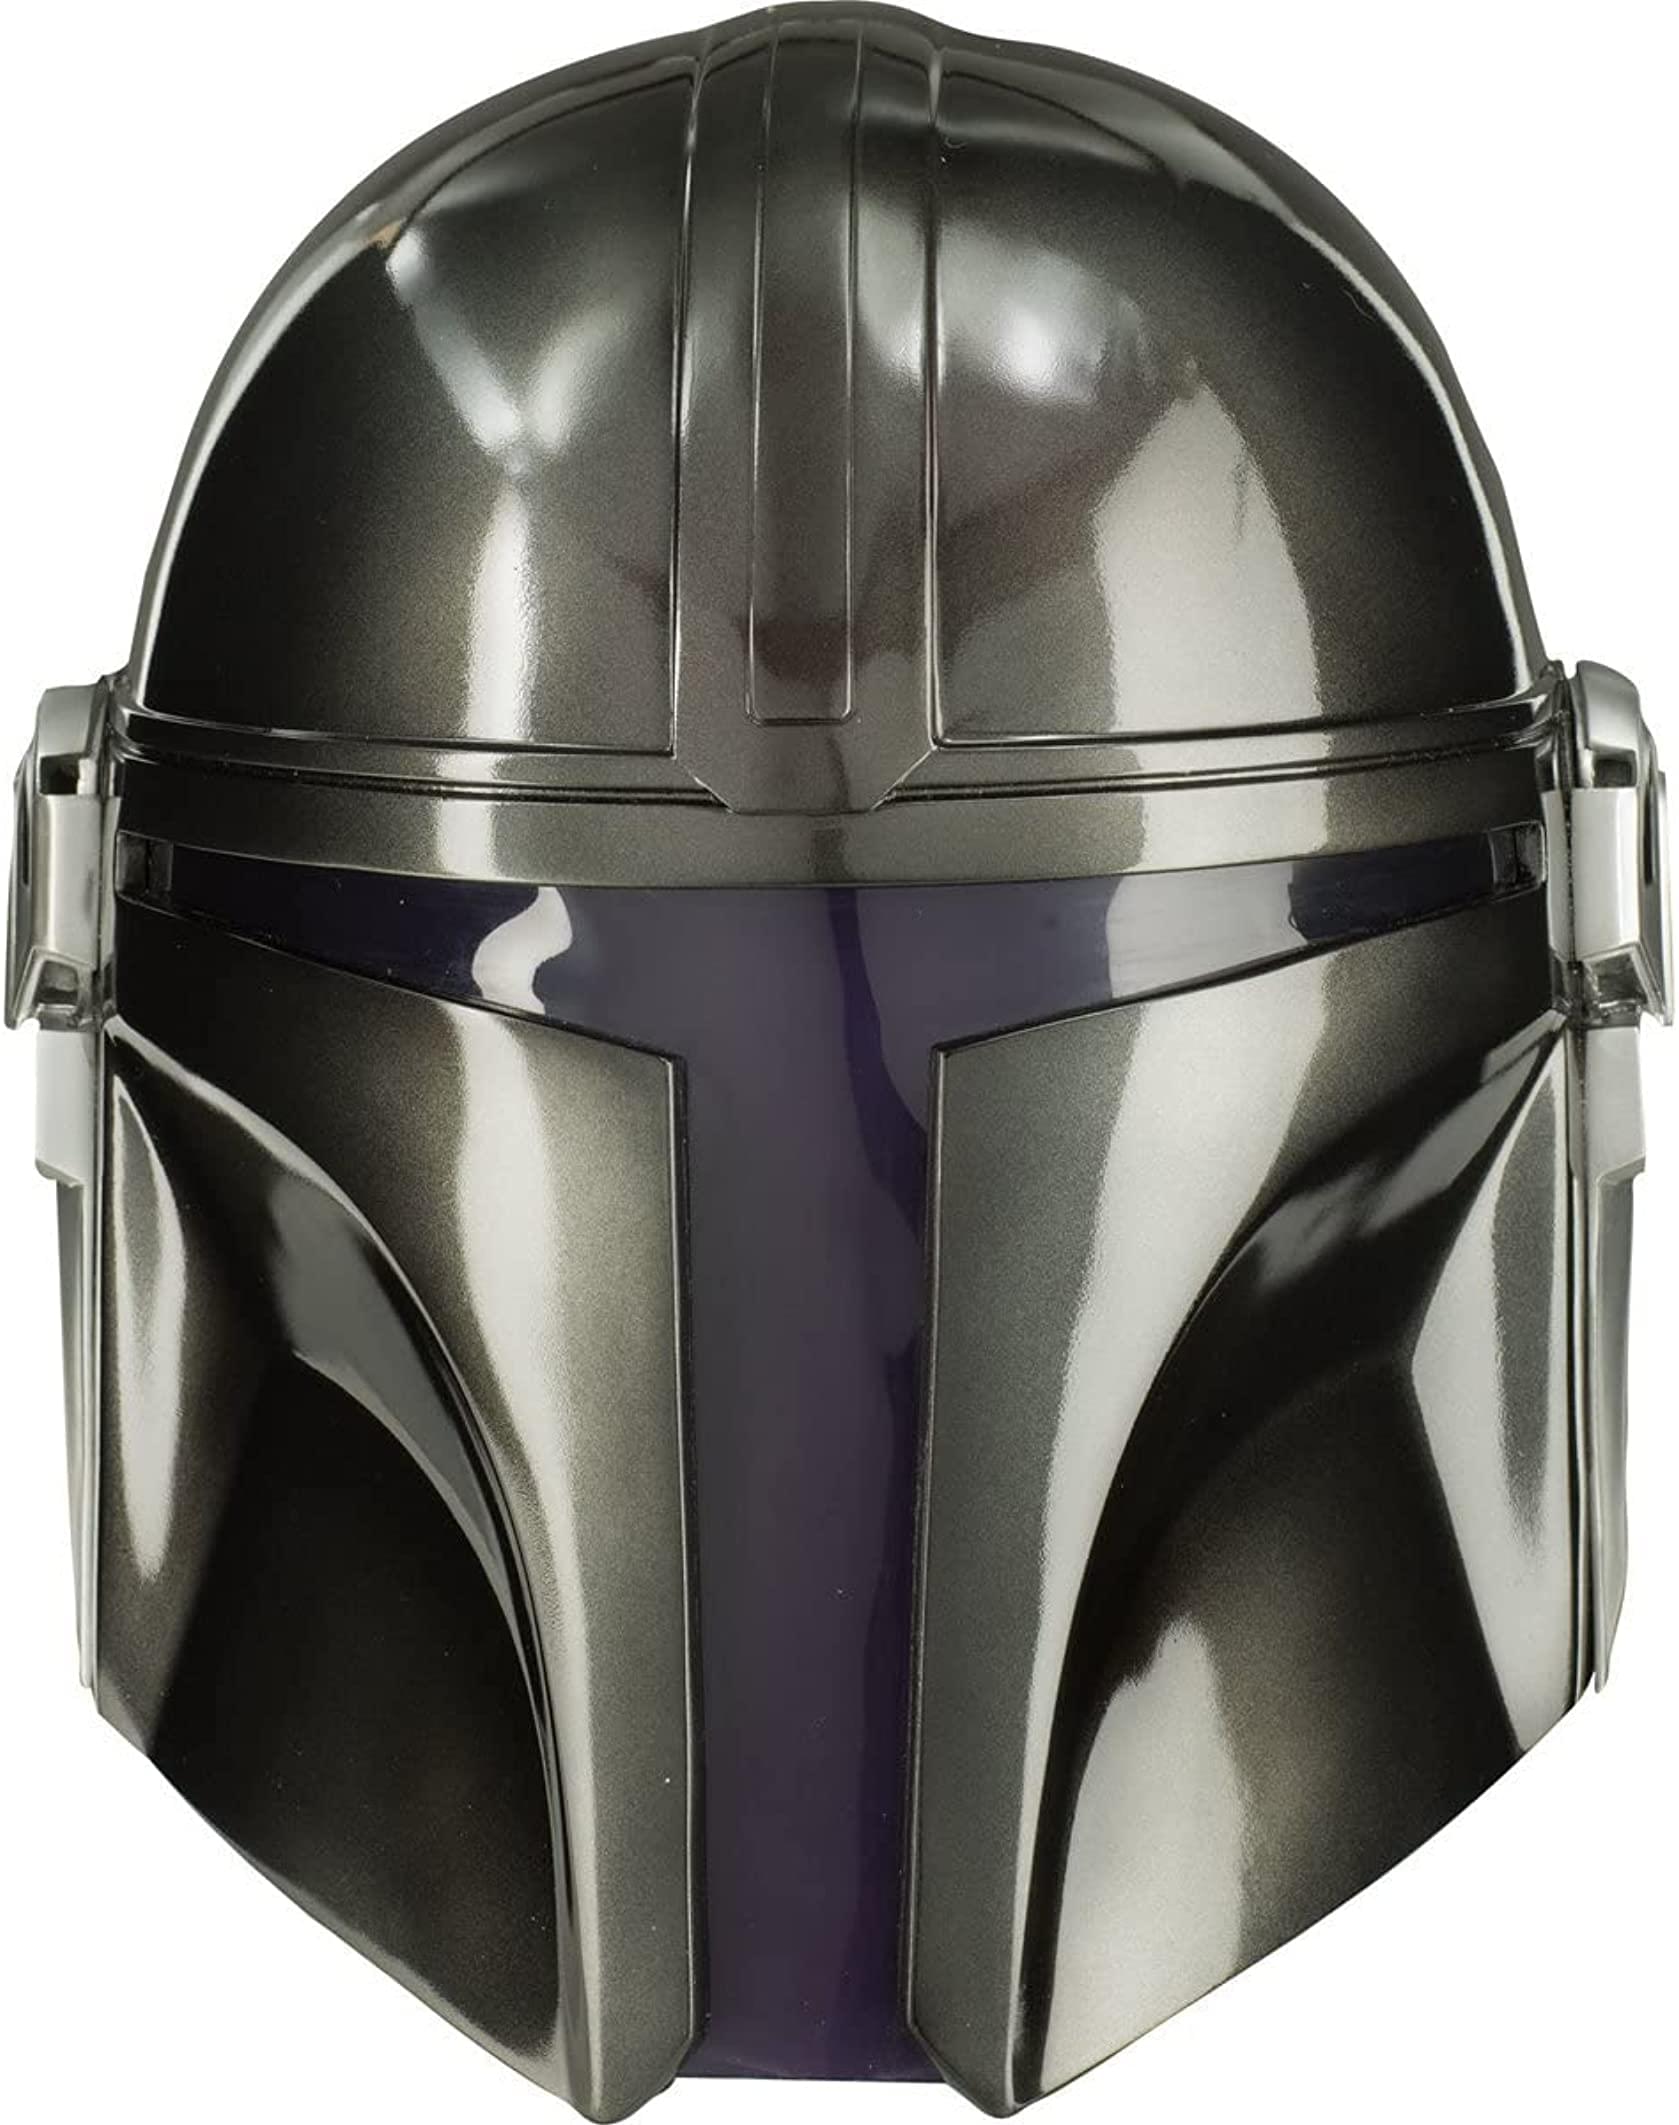 Star Wars The Mandalorian Season 2 Limited Edition EFX Helmet Replica